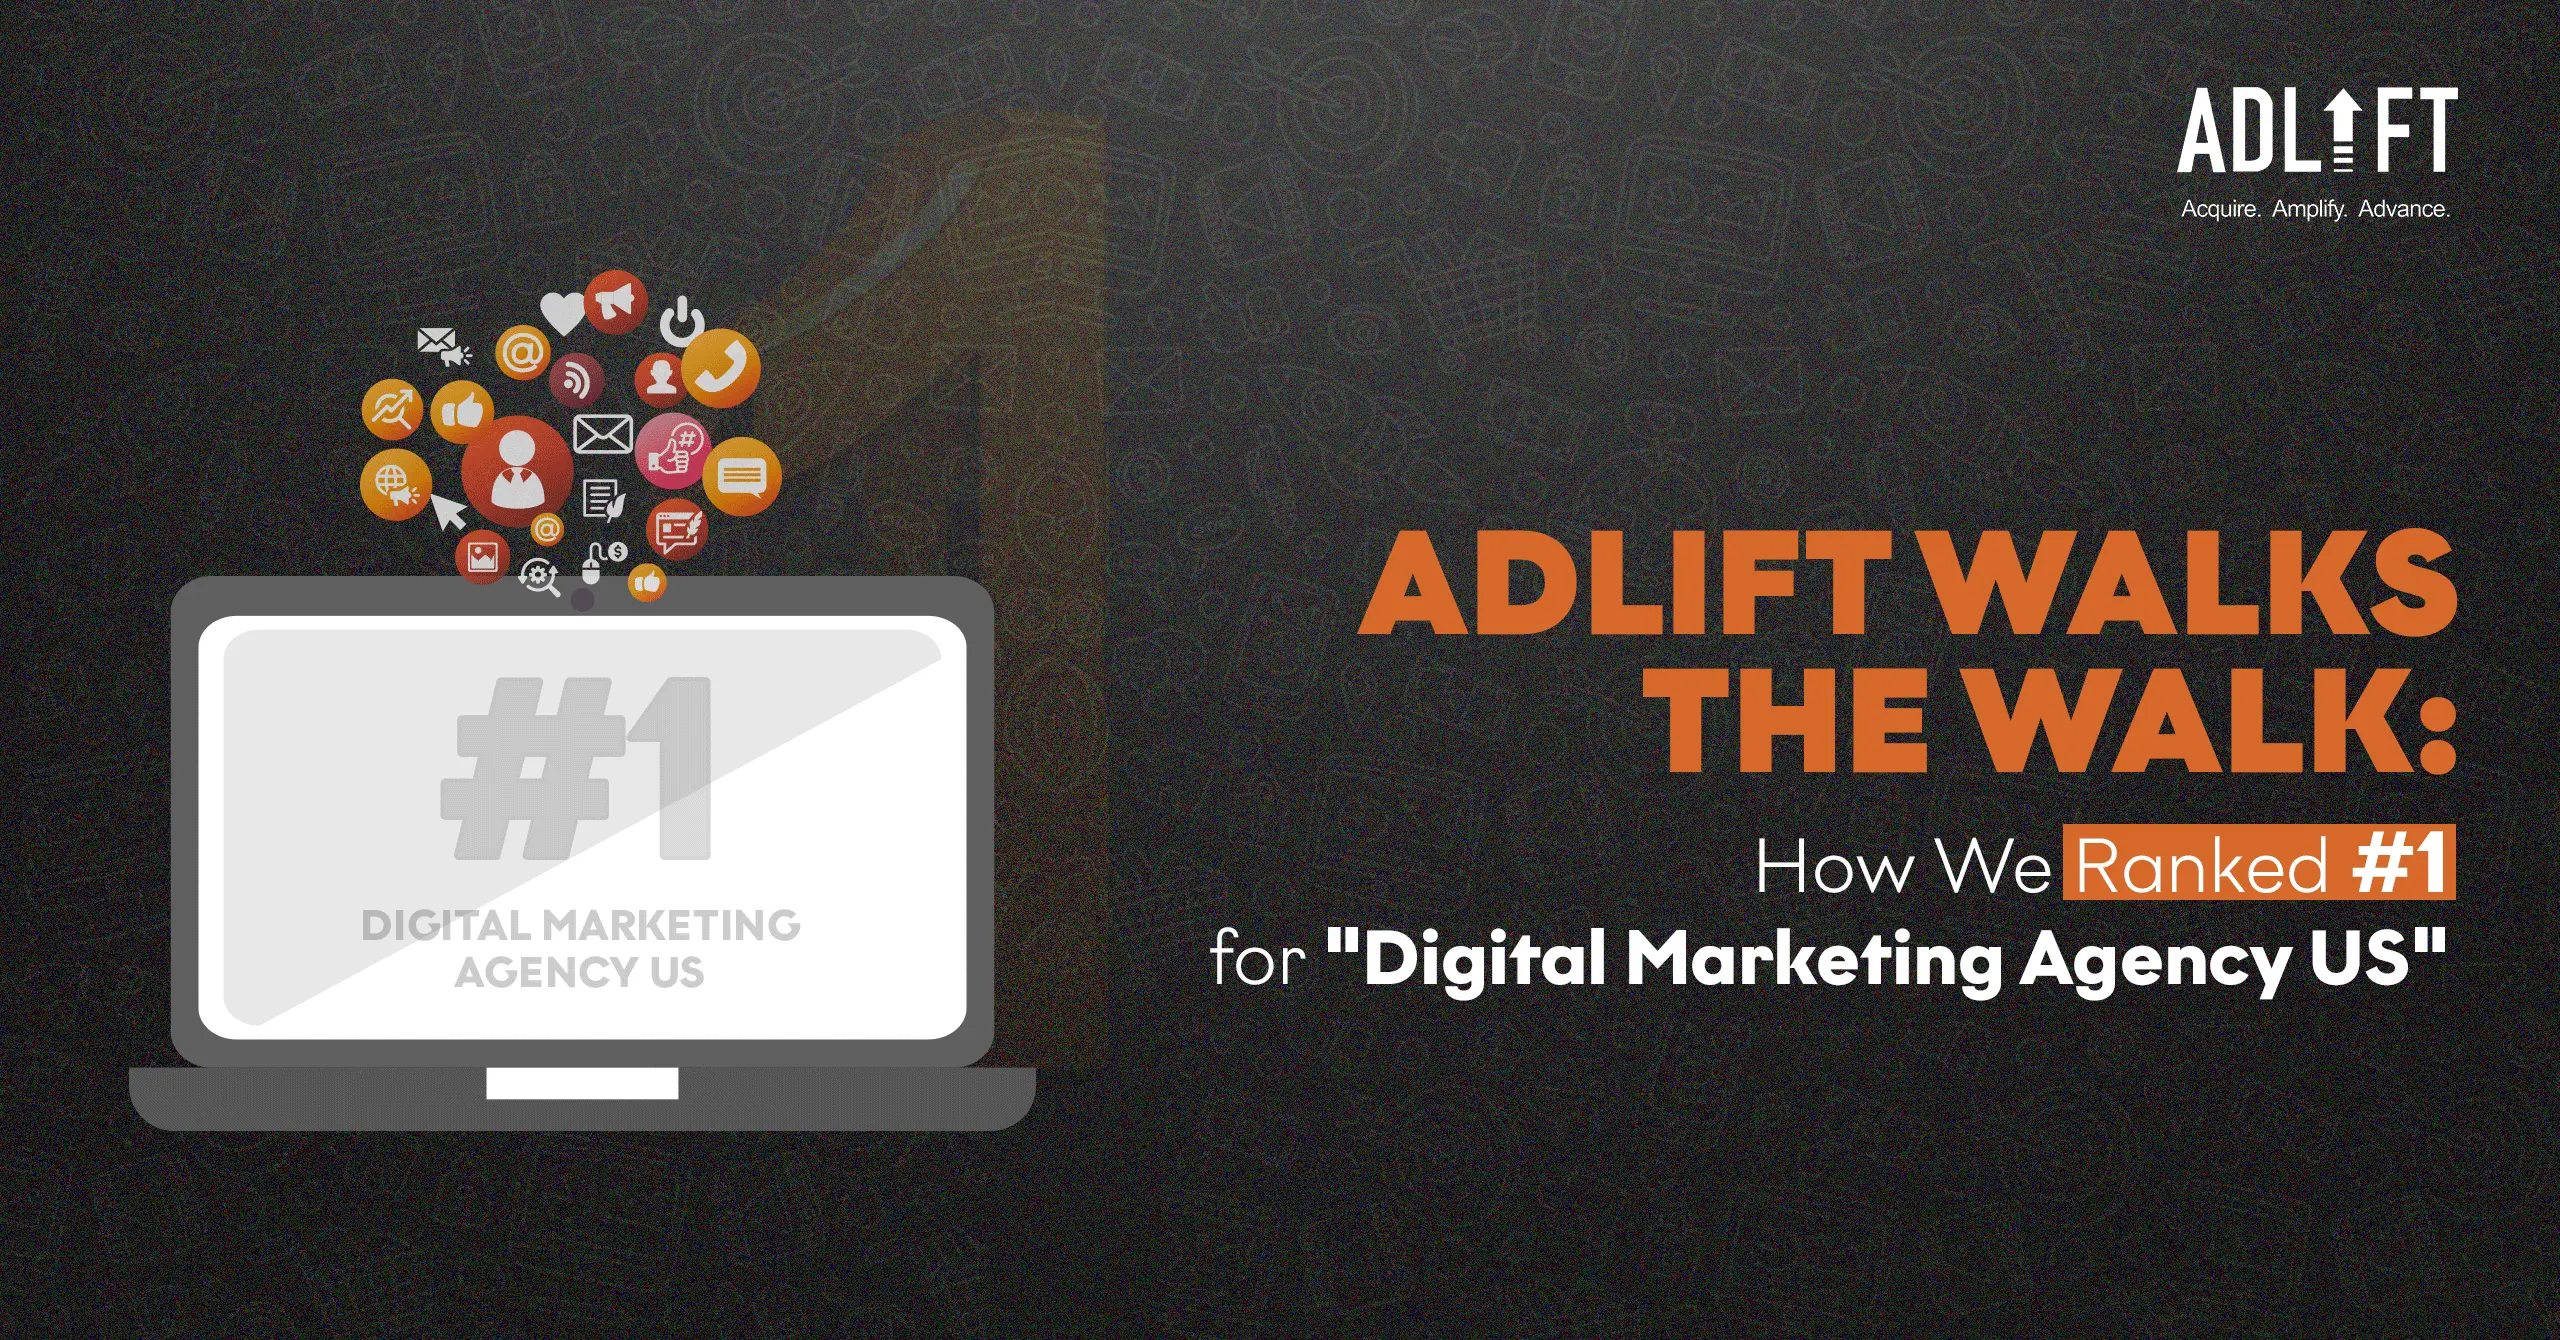 AdLift Walks the Walk: How We Ranked #1 for “Digital Marketing Agency US”